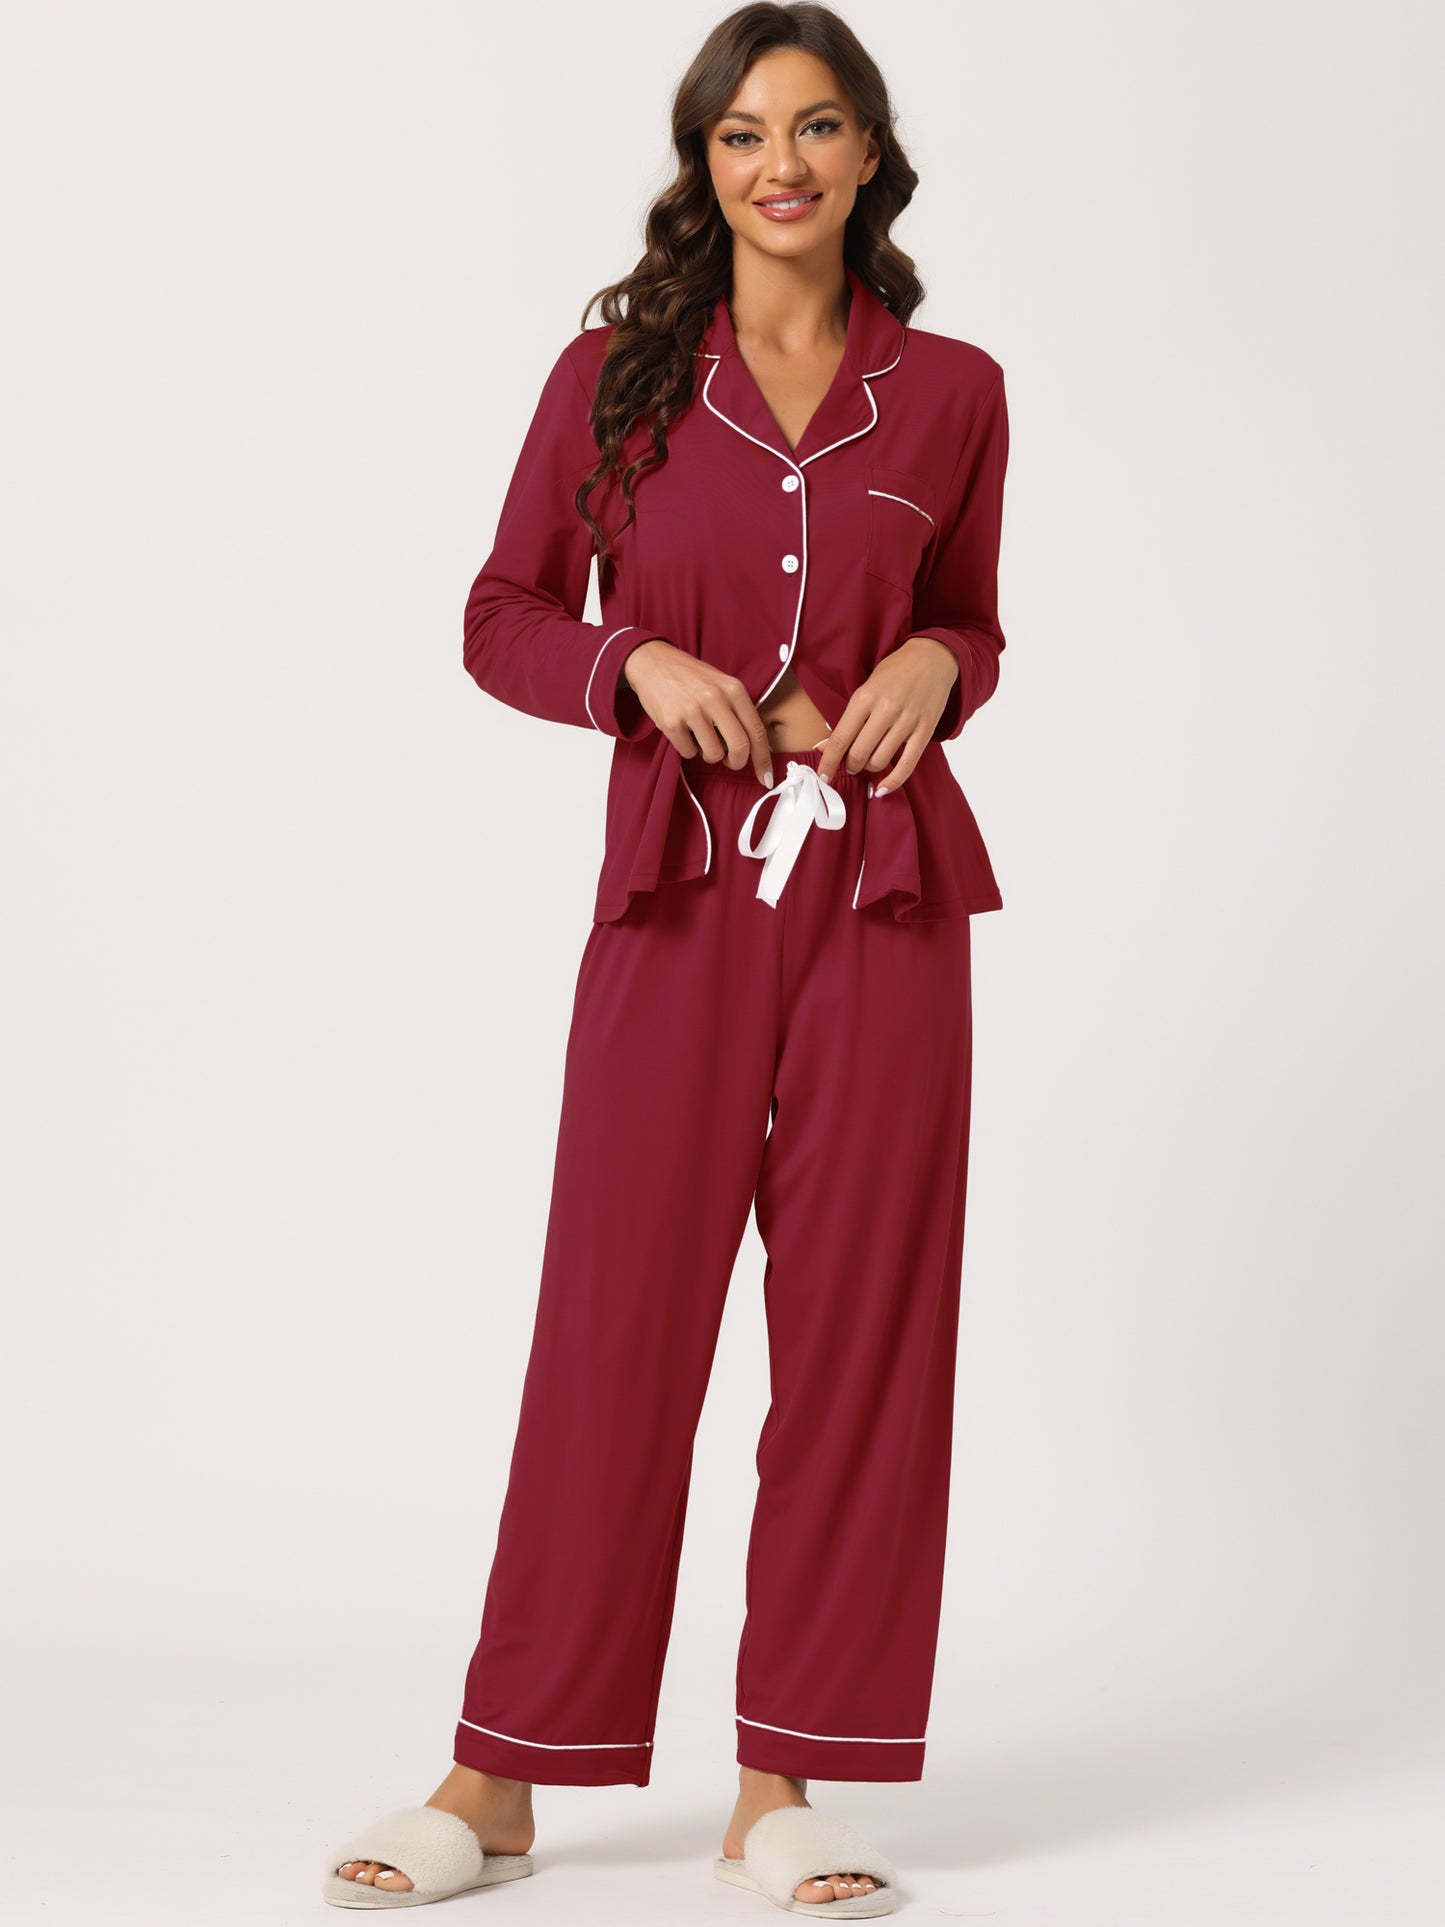 cheibear Pajama Sleep Shirt Nightwear Sleepwear Lounge Modal Pj Sets Red